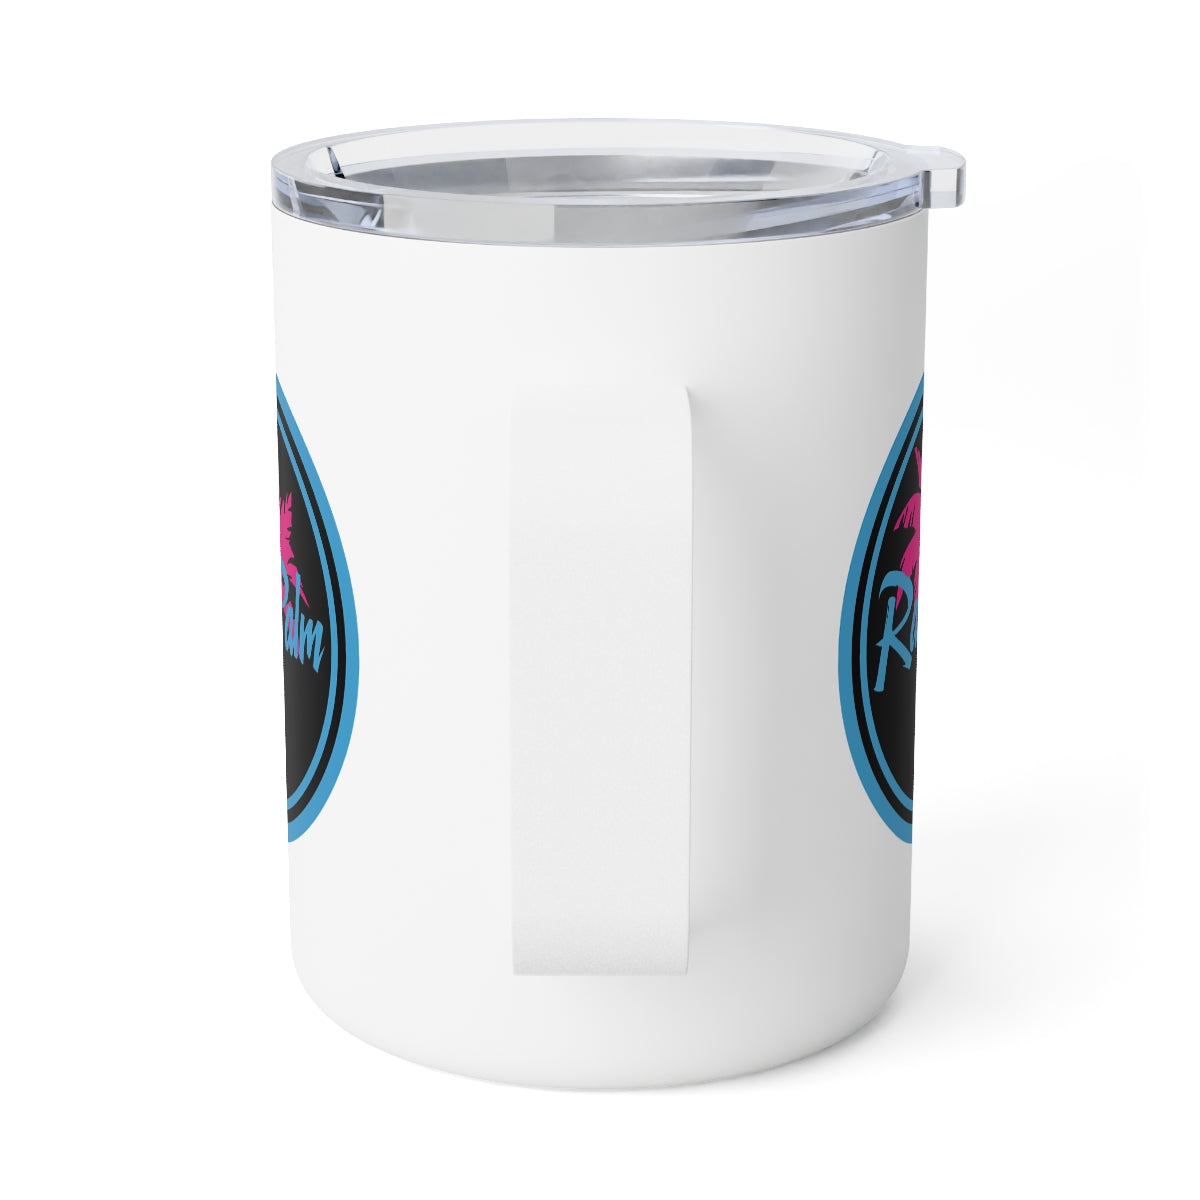 Rad Palm Blue Logo Insulated Coffee Mug, 10oz